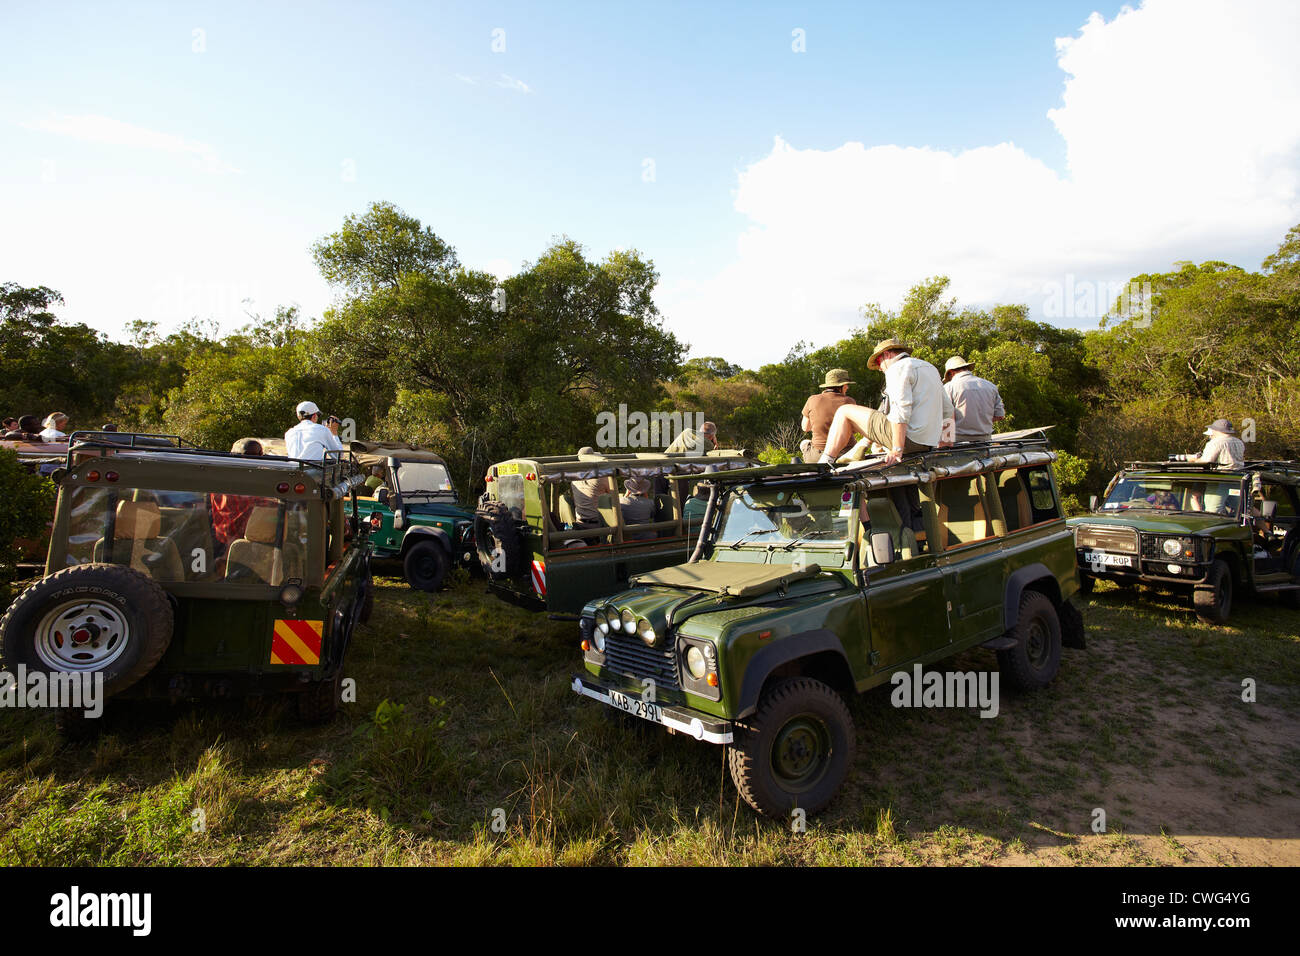 Jeep Safari tourism in Kenya Stock Photo